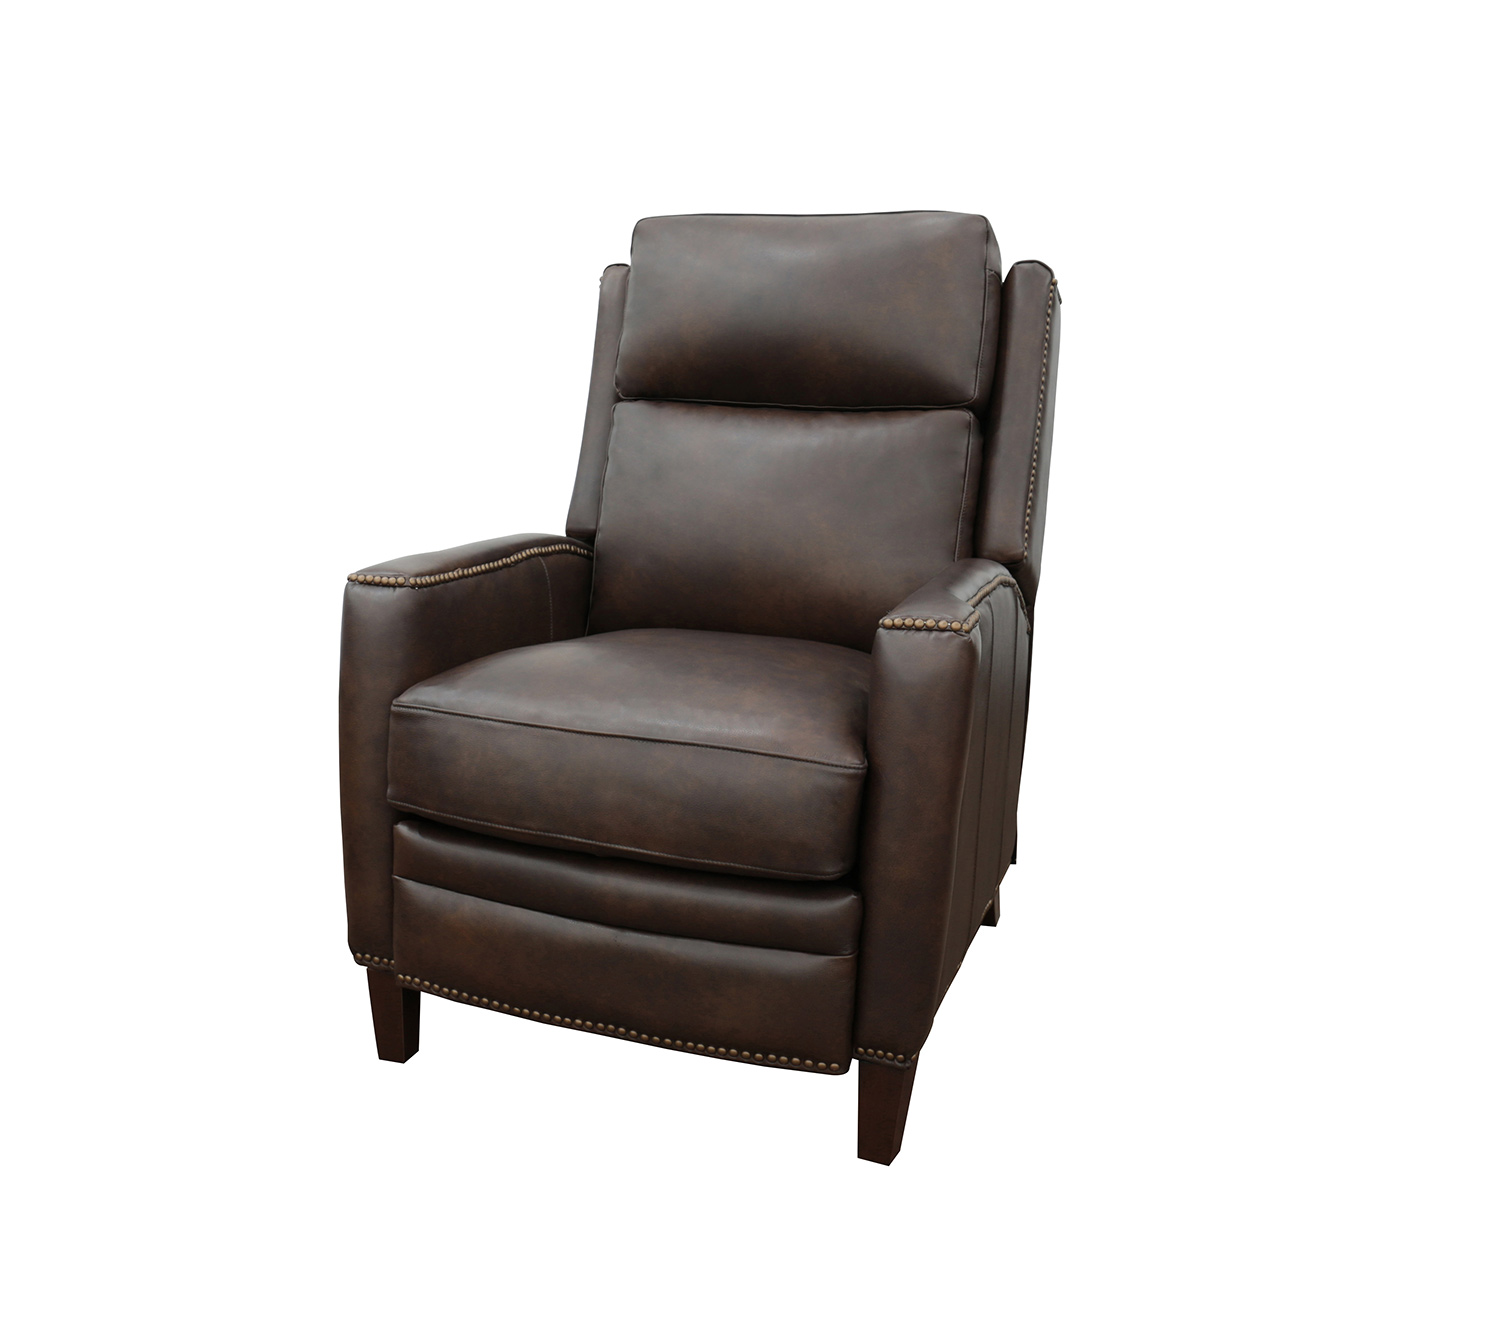 Barcalounger Nolan Power Recliner Chair with Power Head Rest - Ashford Walnut/All Leather